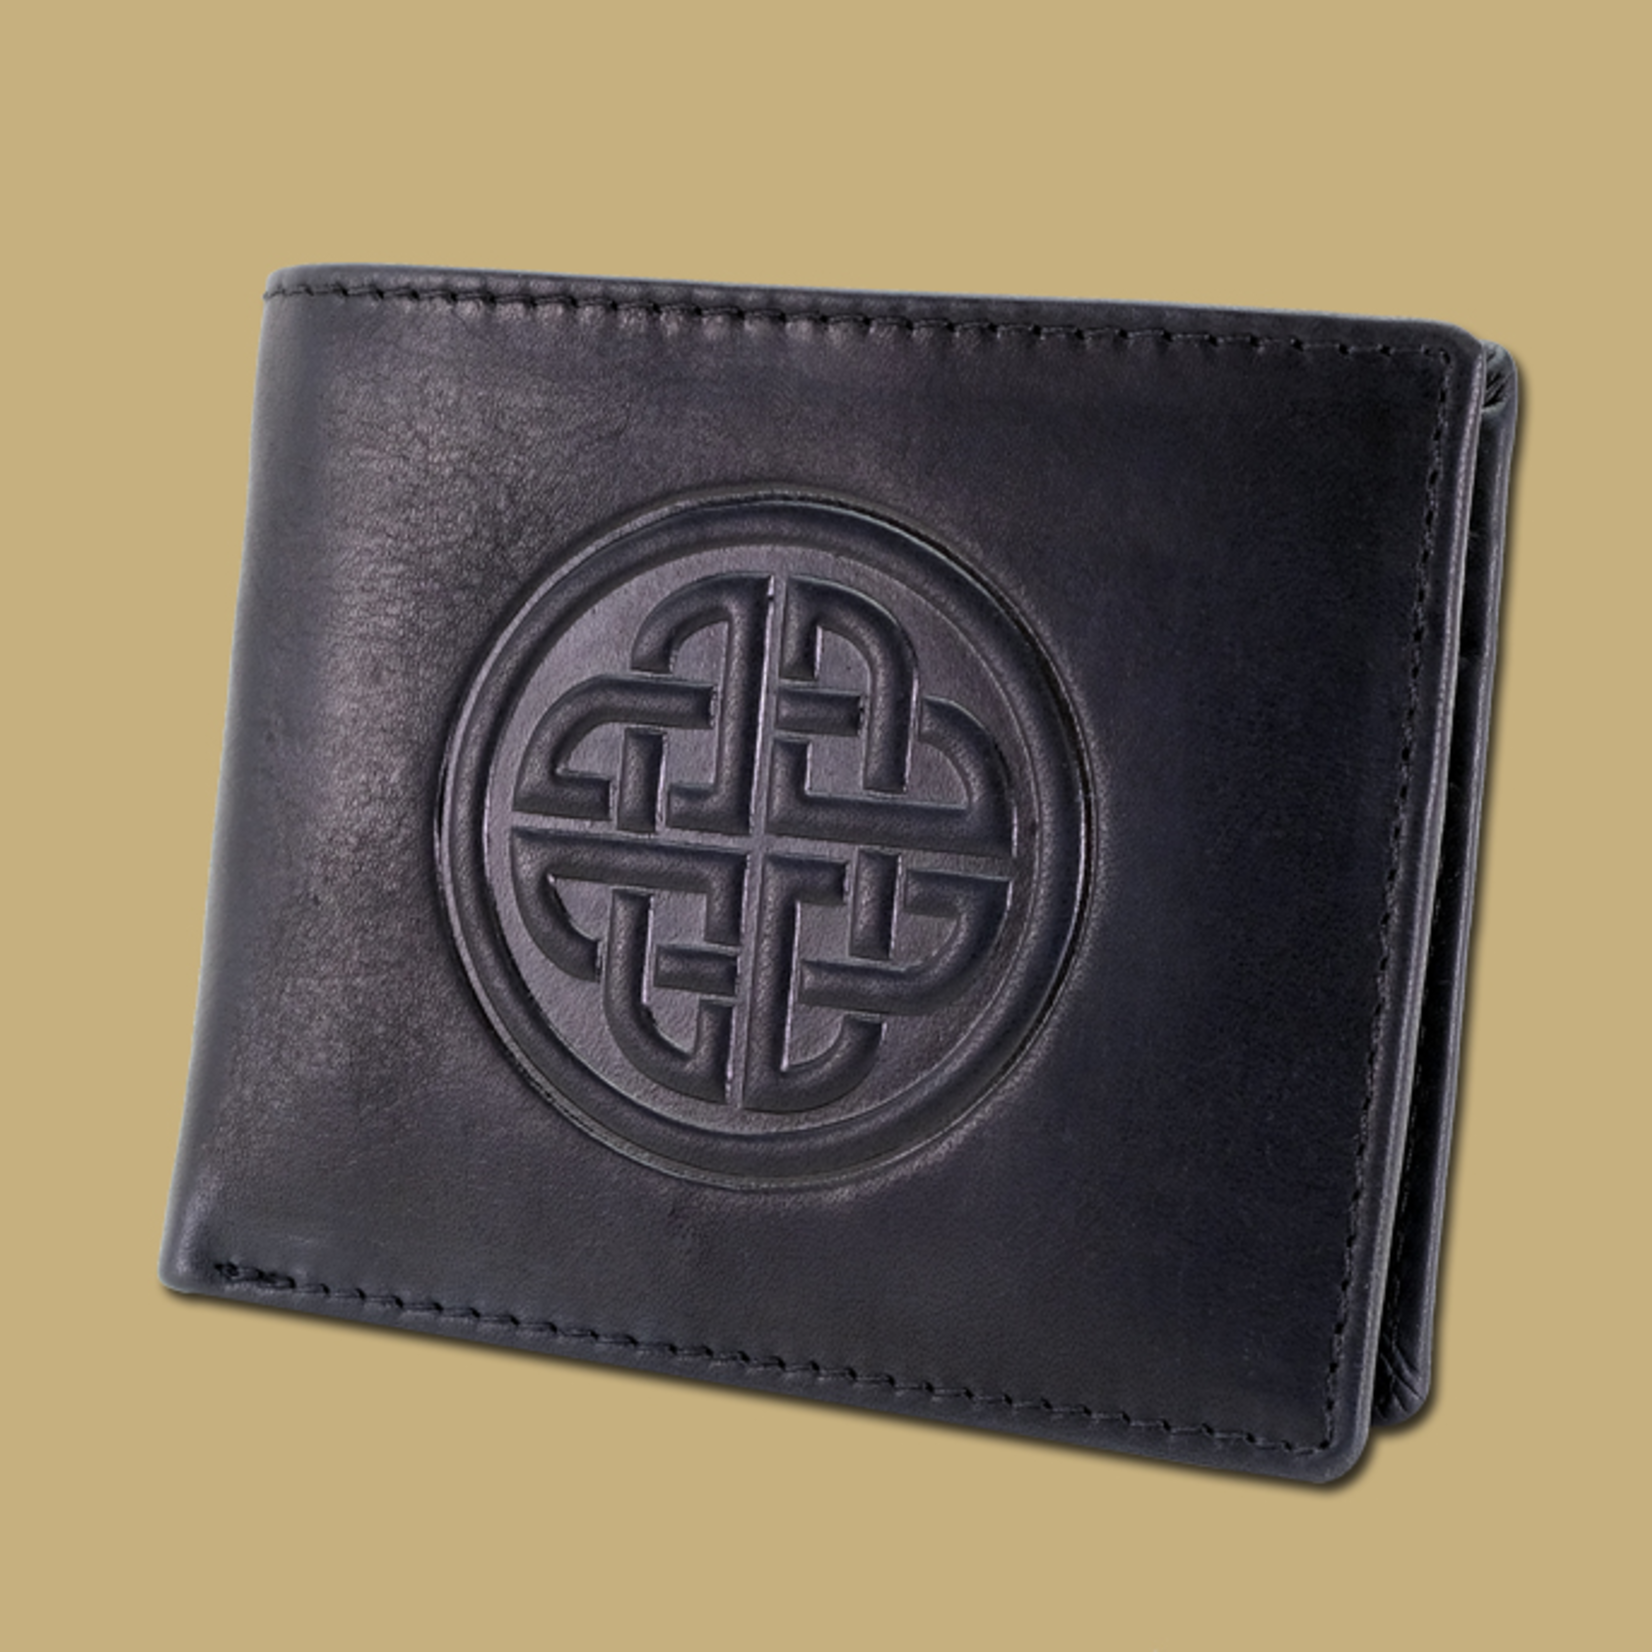 Lee River Leather Wallet: Conan